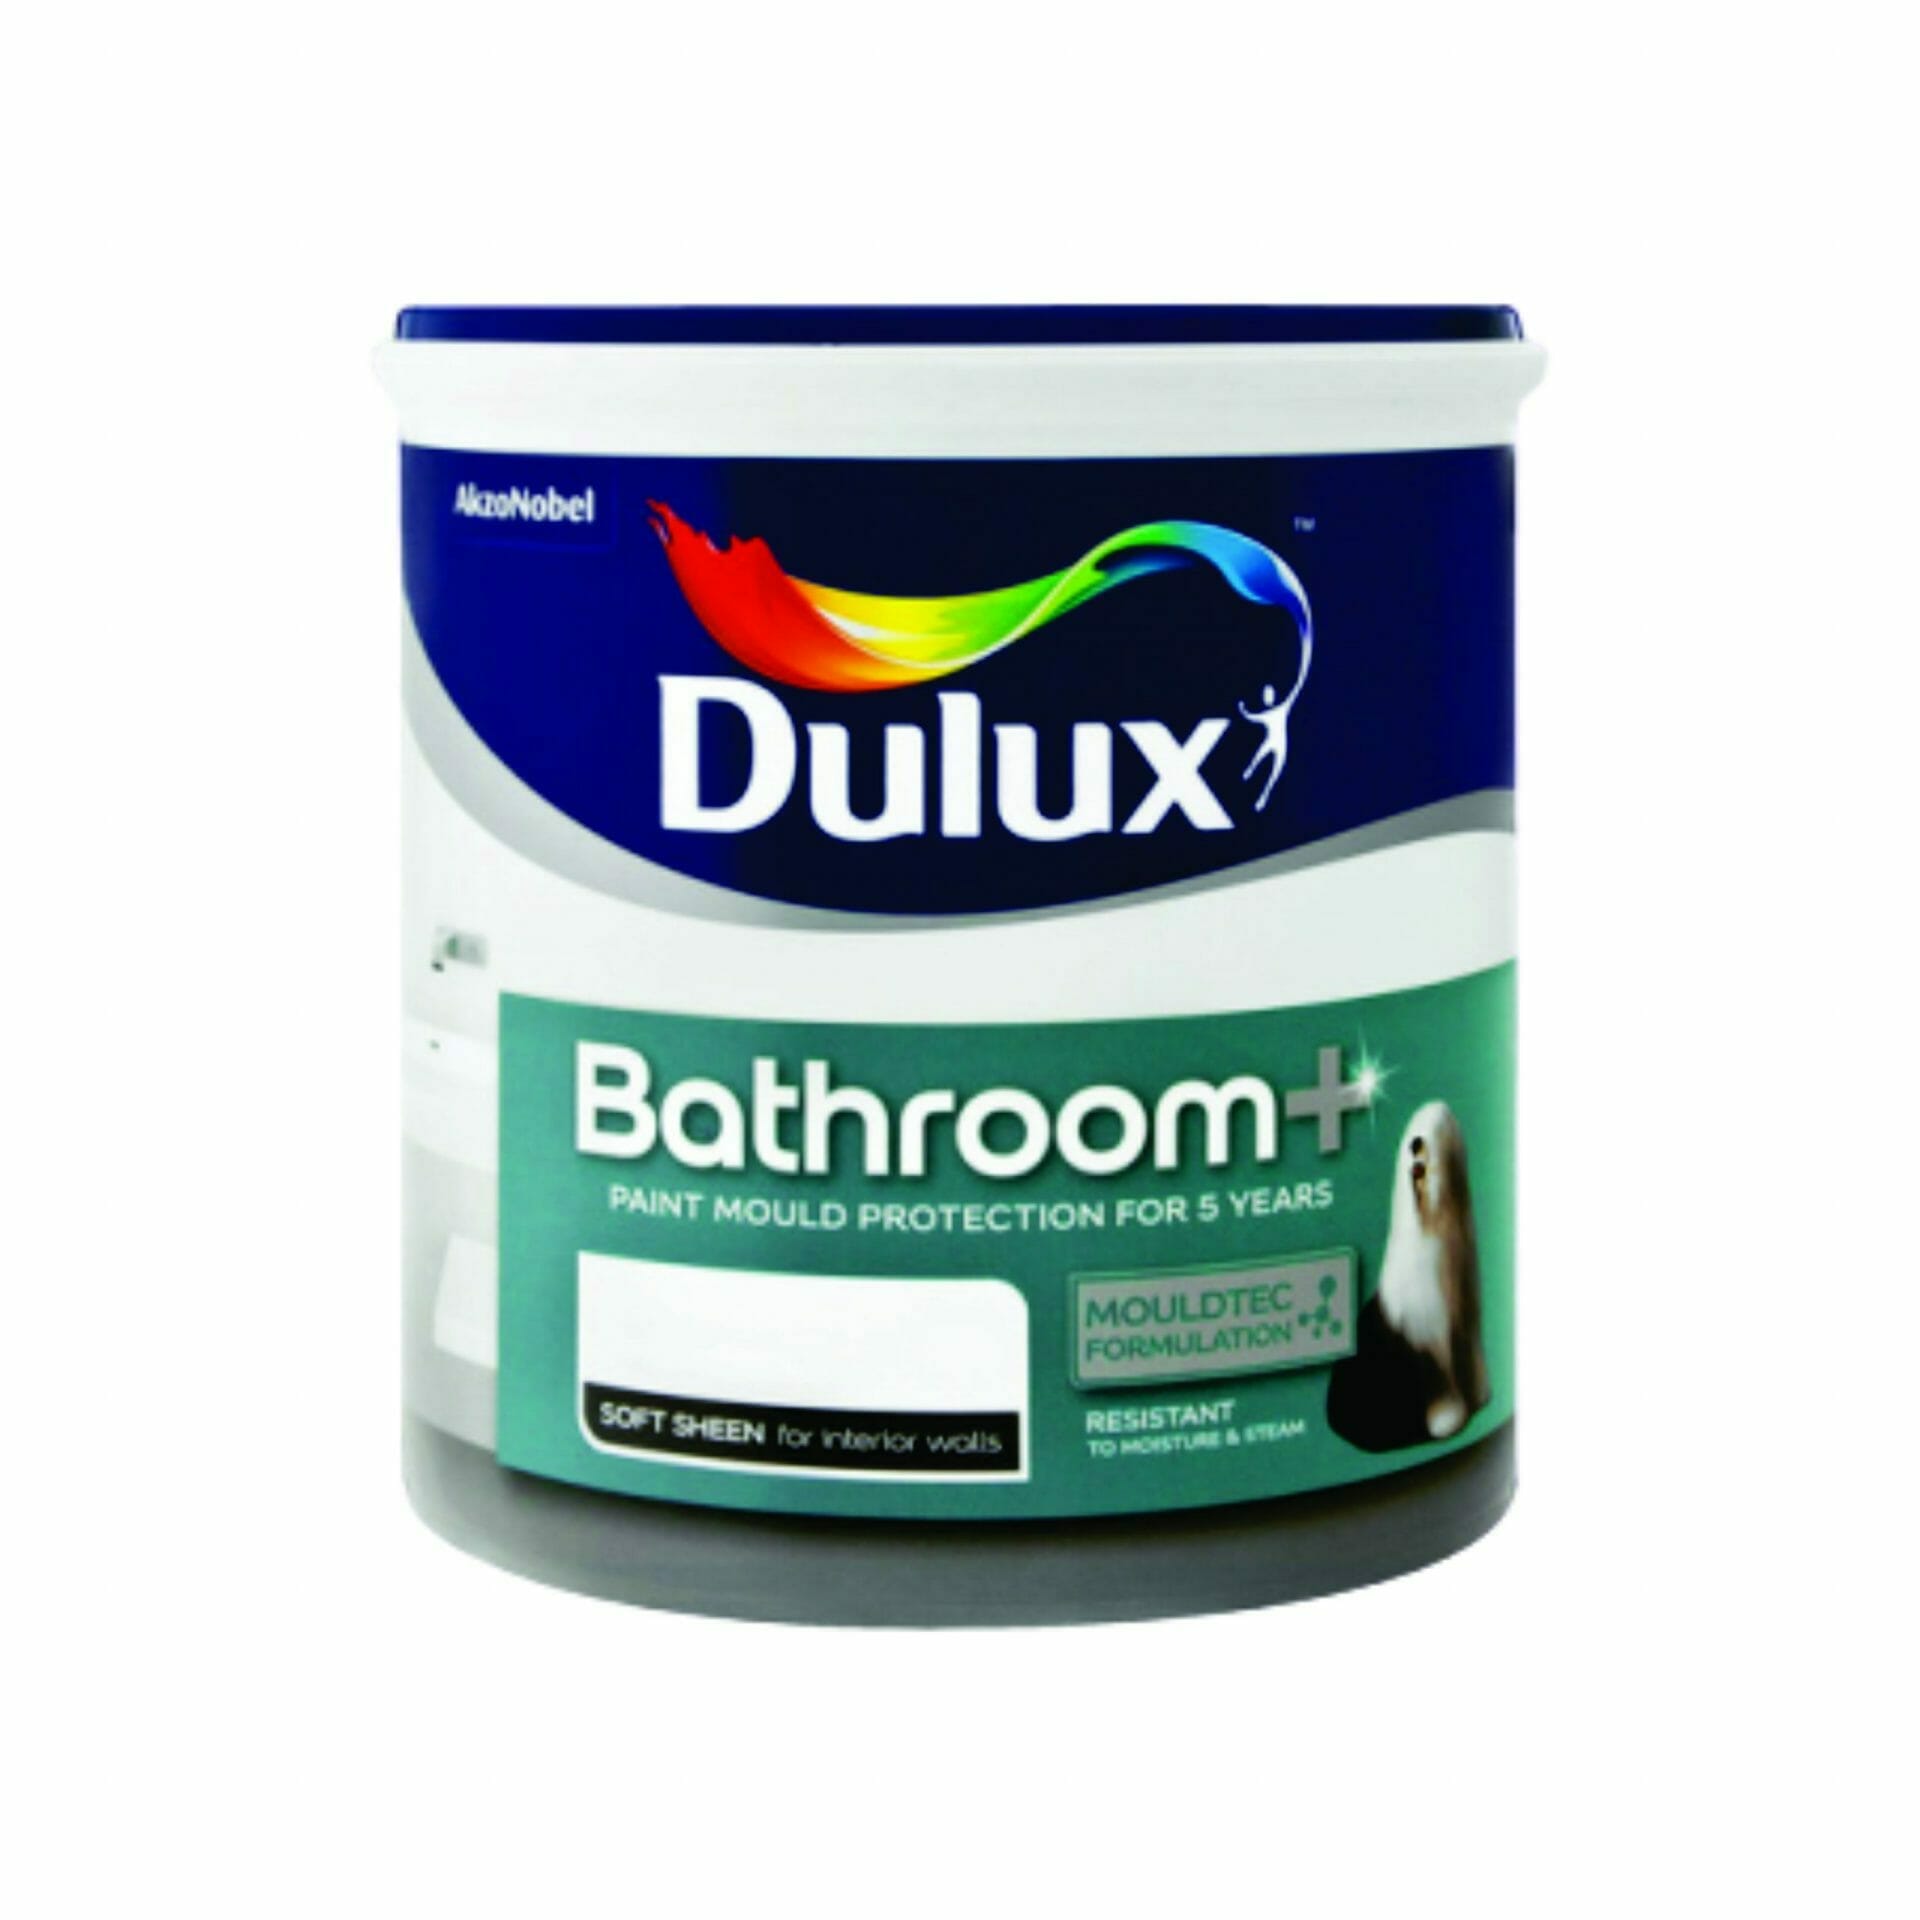 Dulux Bathroom+ Hyper Paint (Pty) Ltd